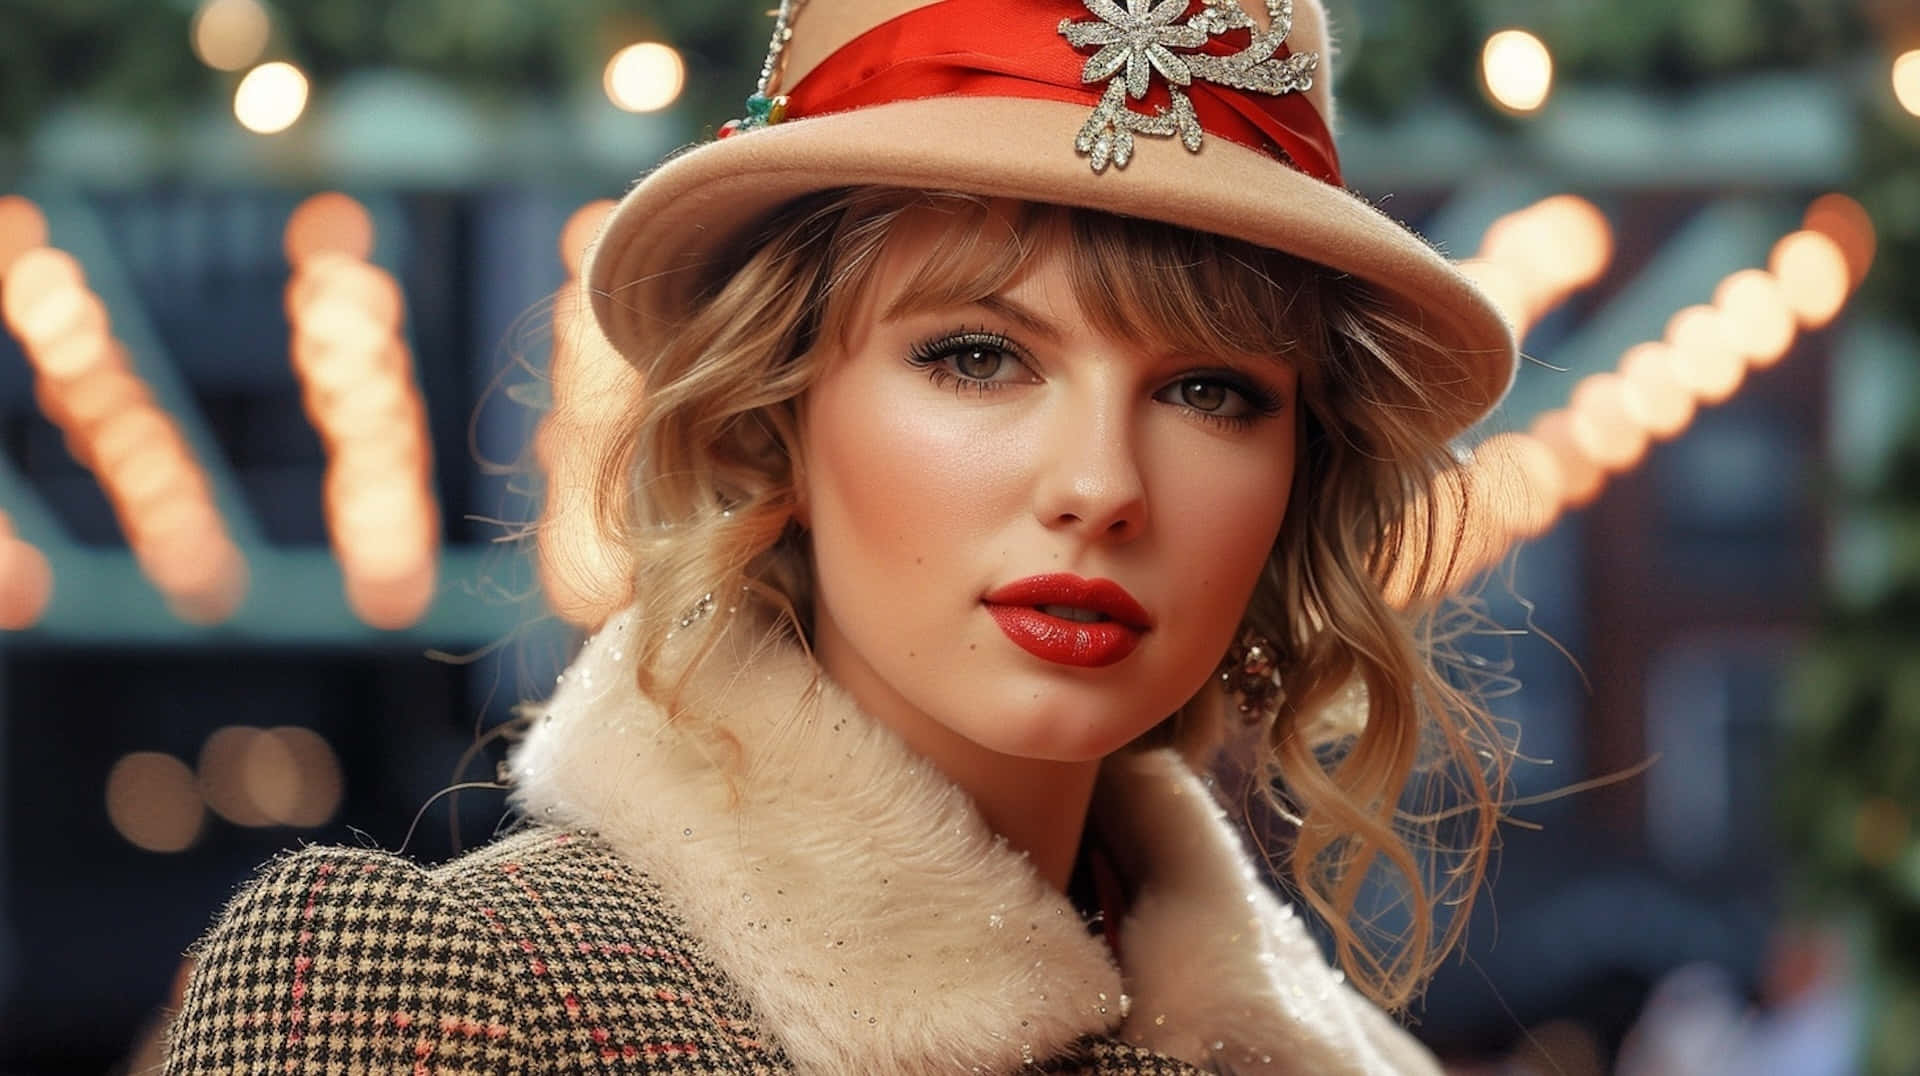 Festive Winter Fashion Taylor Swift Wallpaper